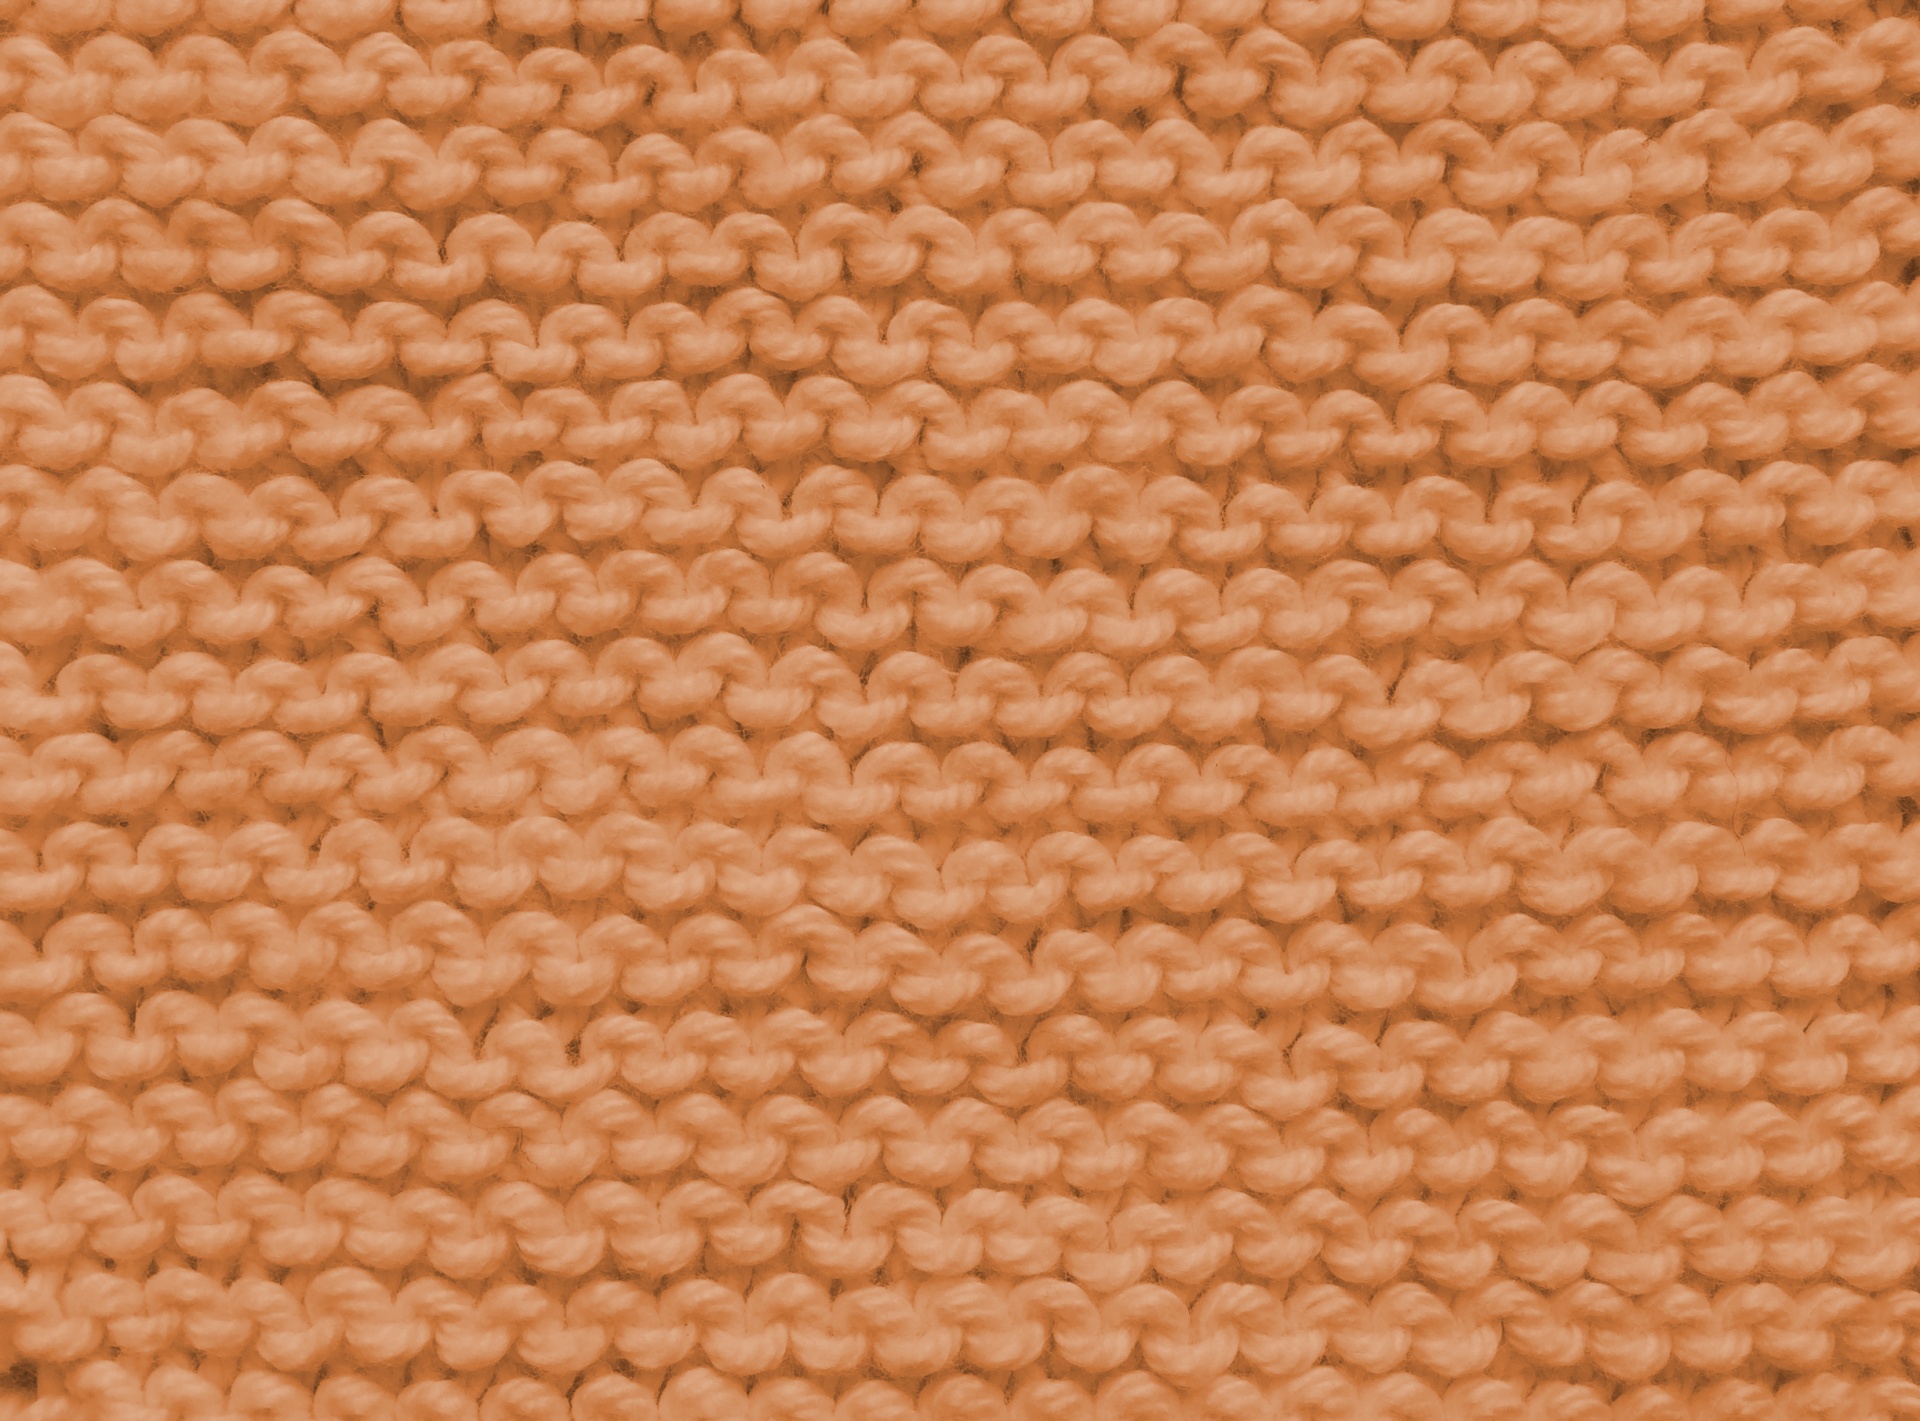 Plain knit stitch in orange background